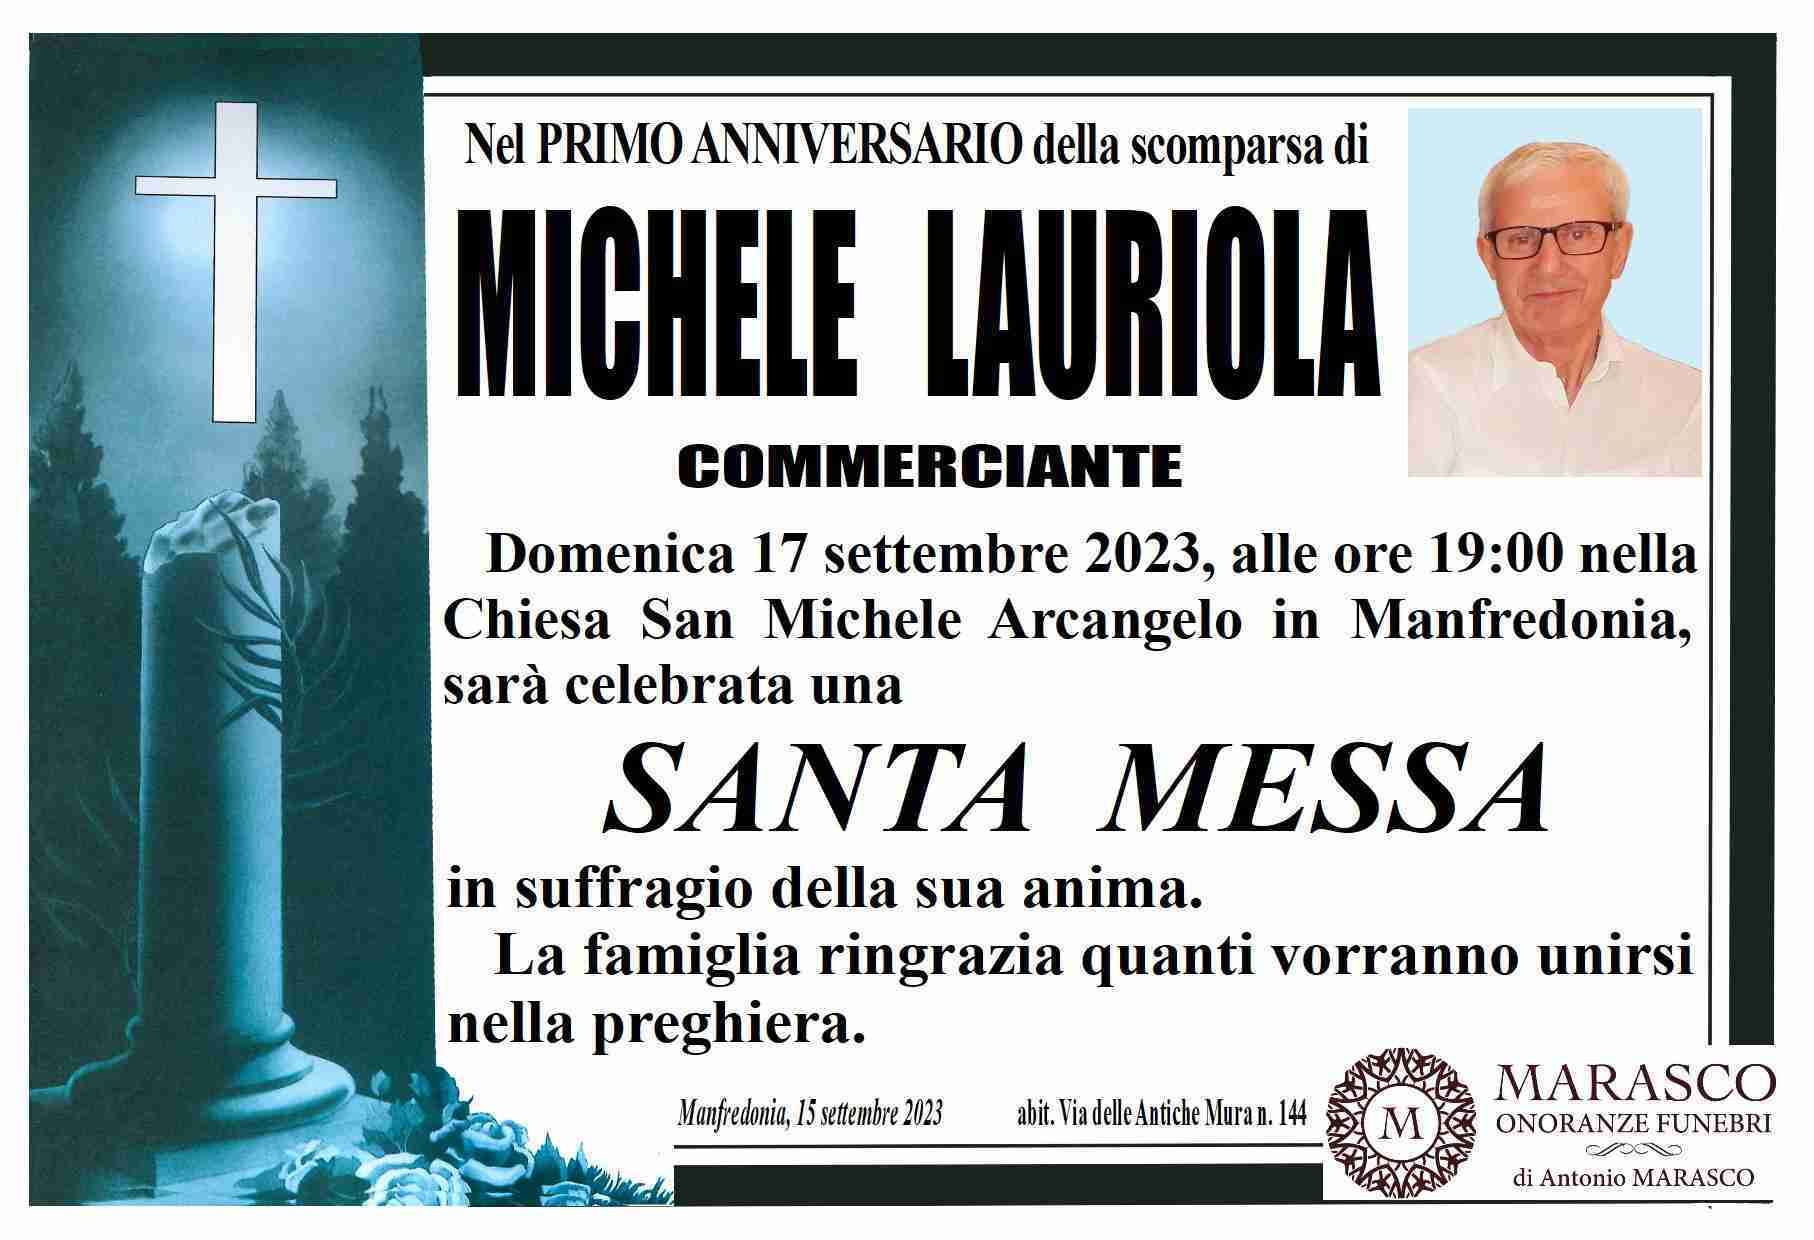 Michele Lauriola